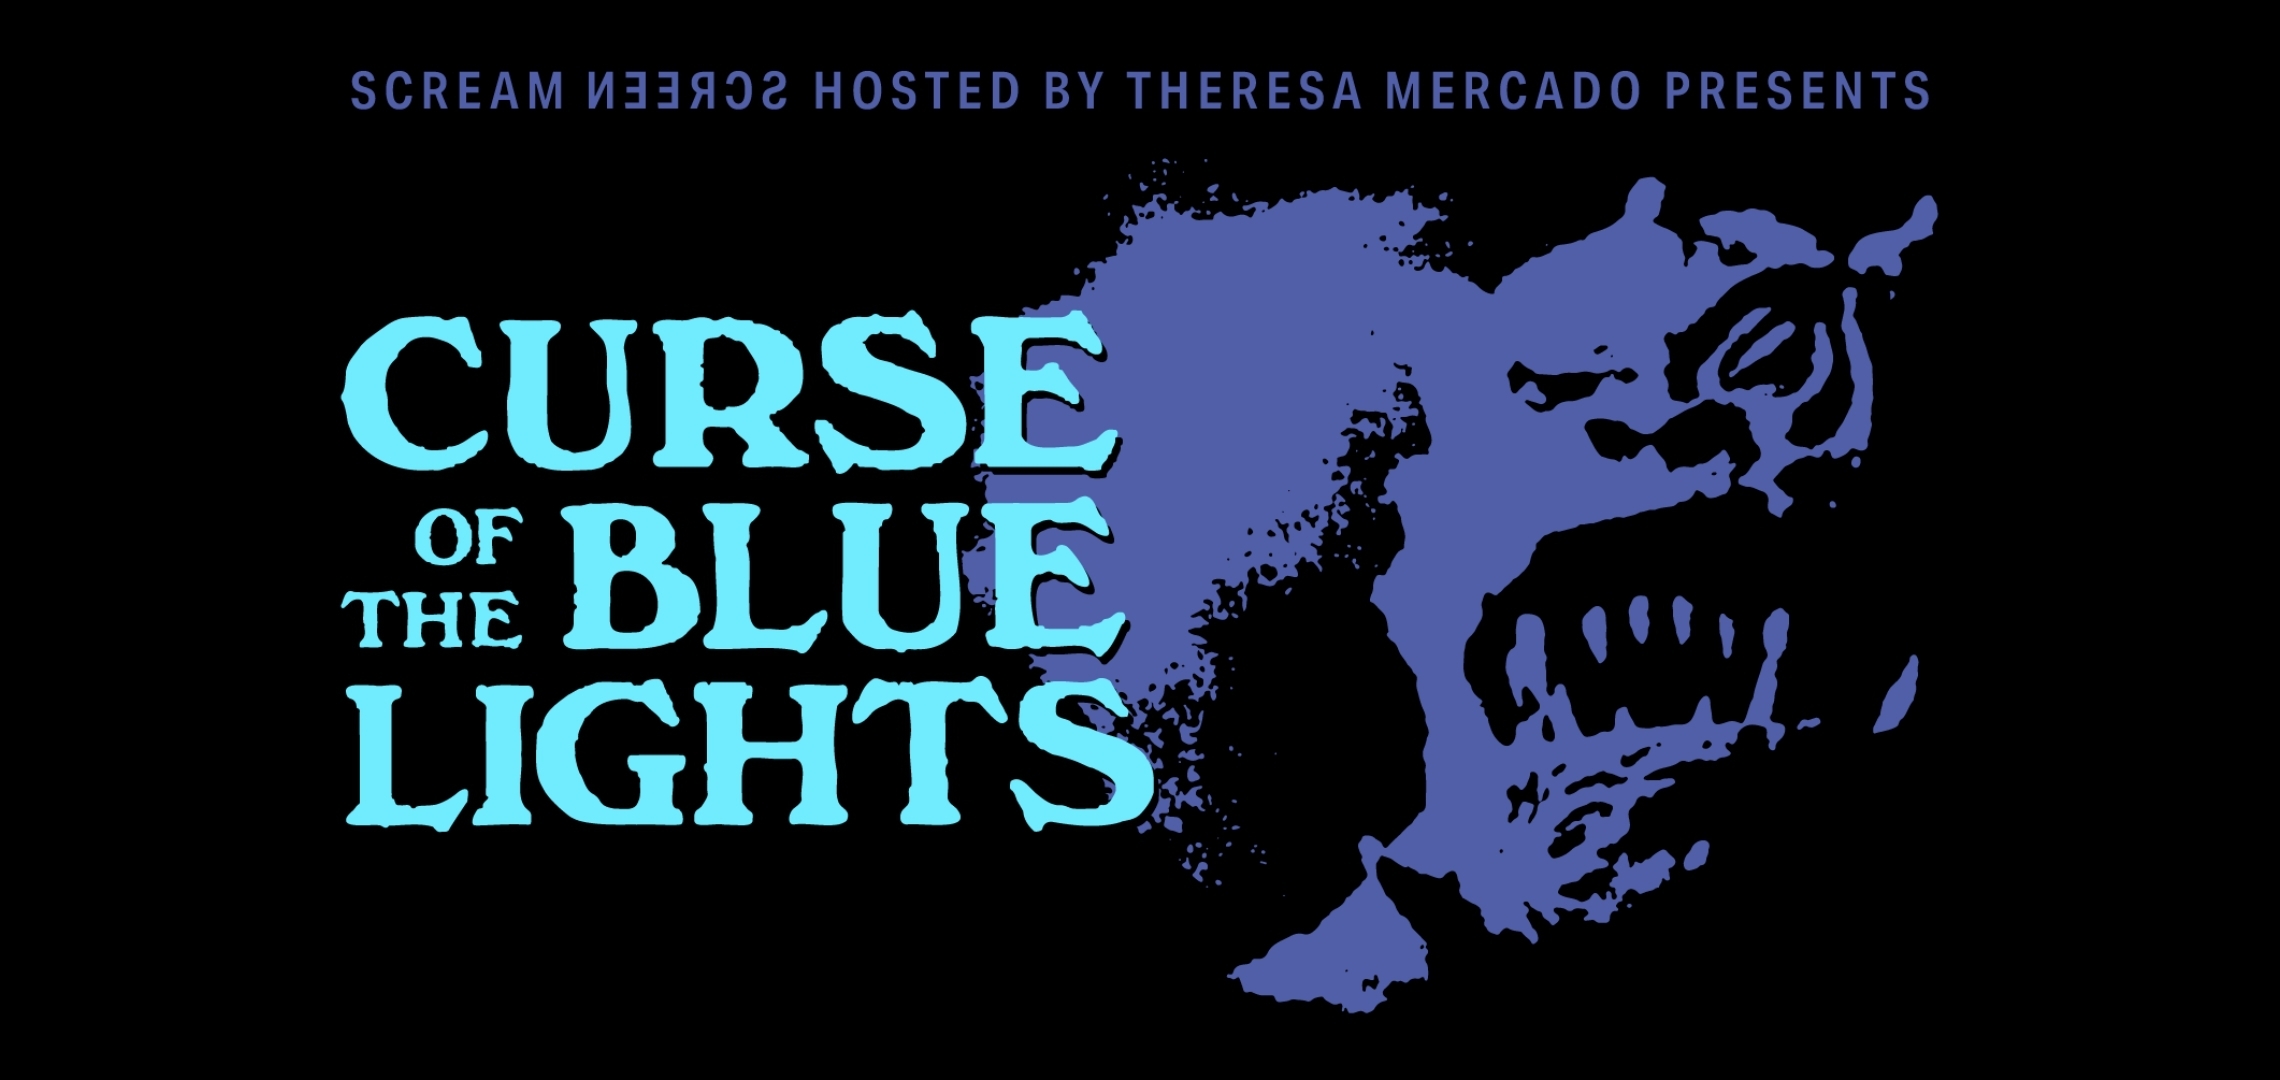 Scream Screen presents: CURSE OF THE BLUE LIGHTS (1988)